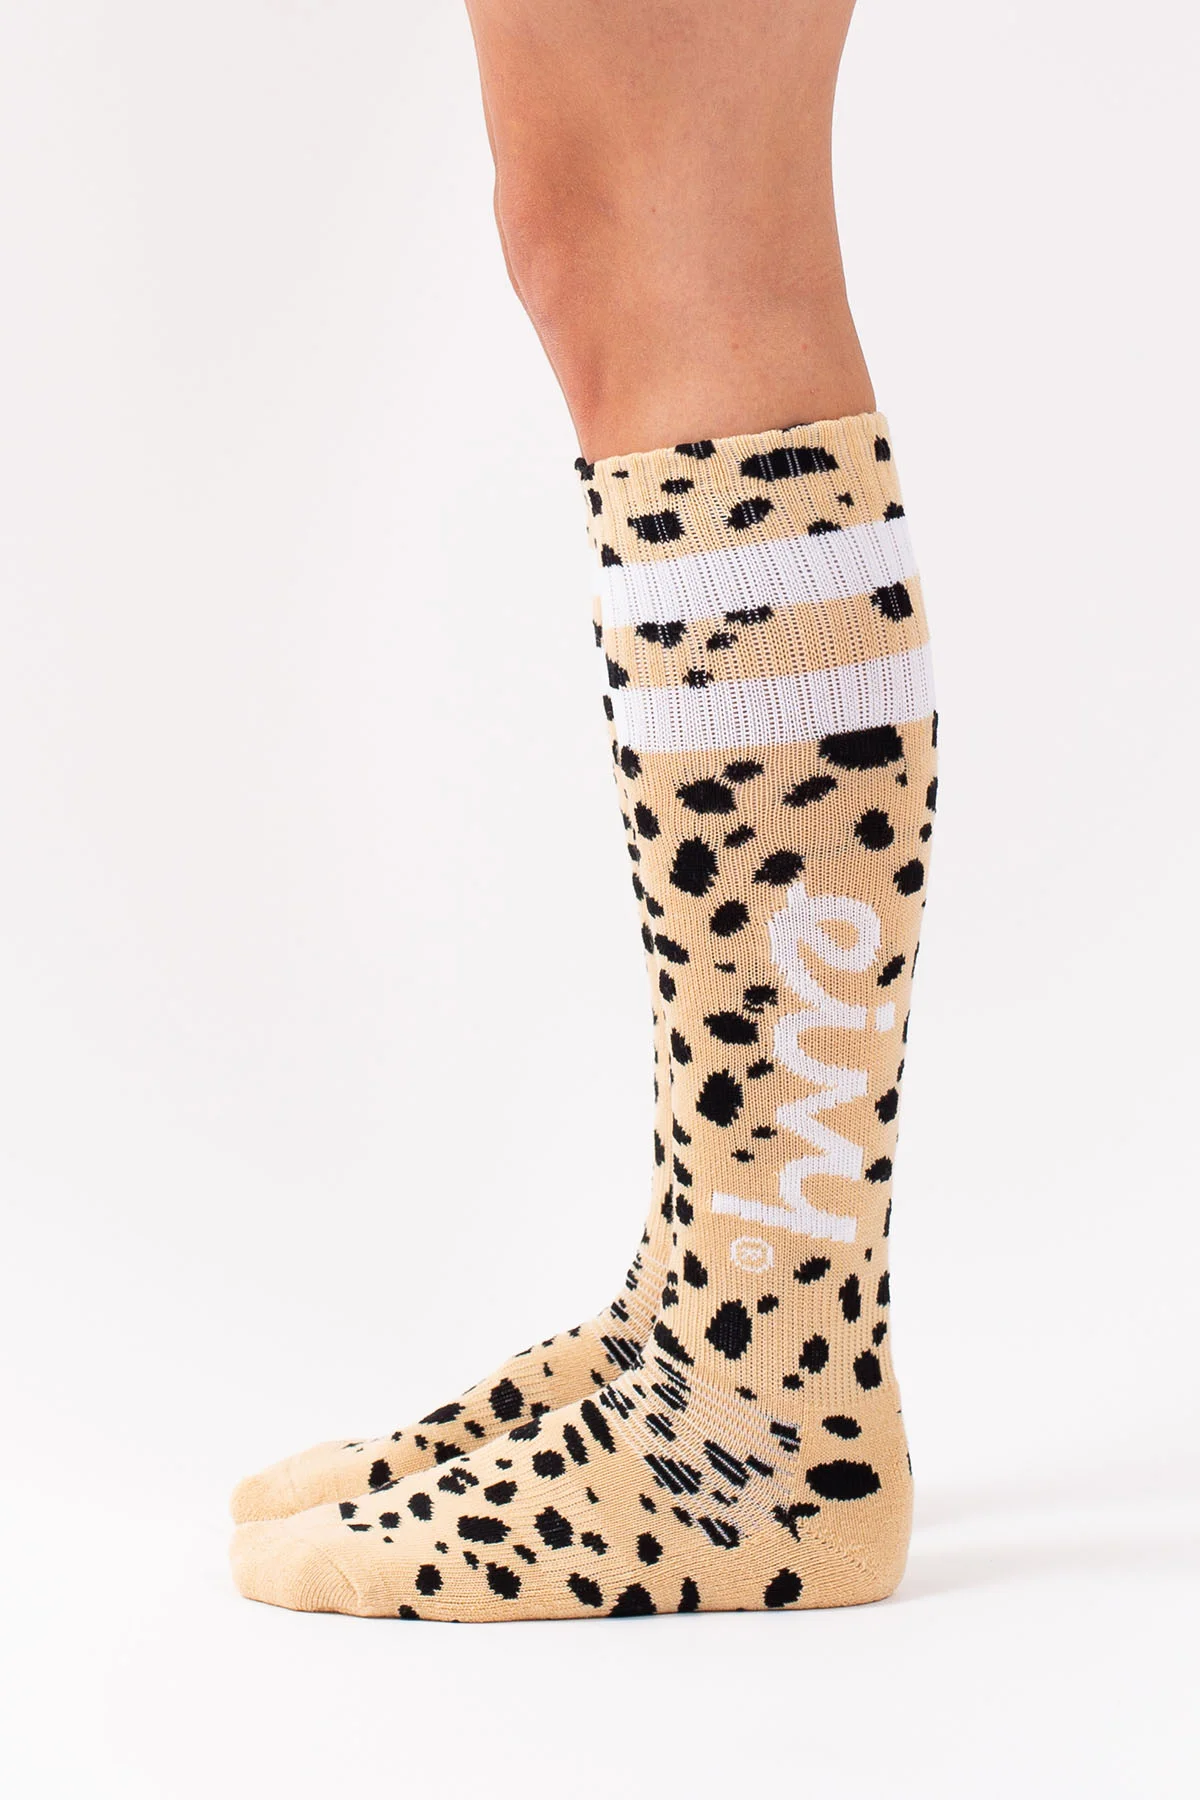 Cheerleader Wool Socks - Cheetah